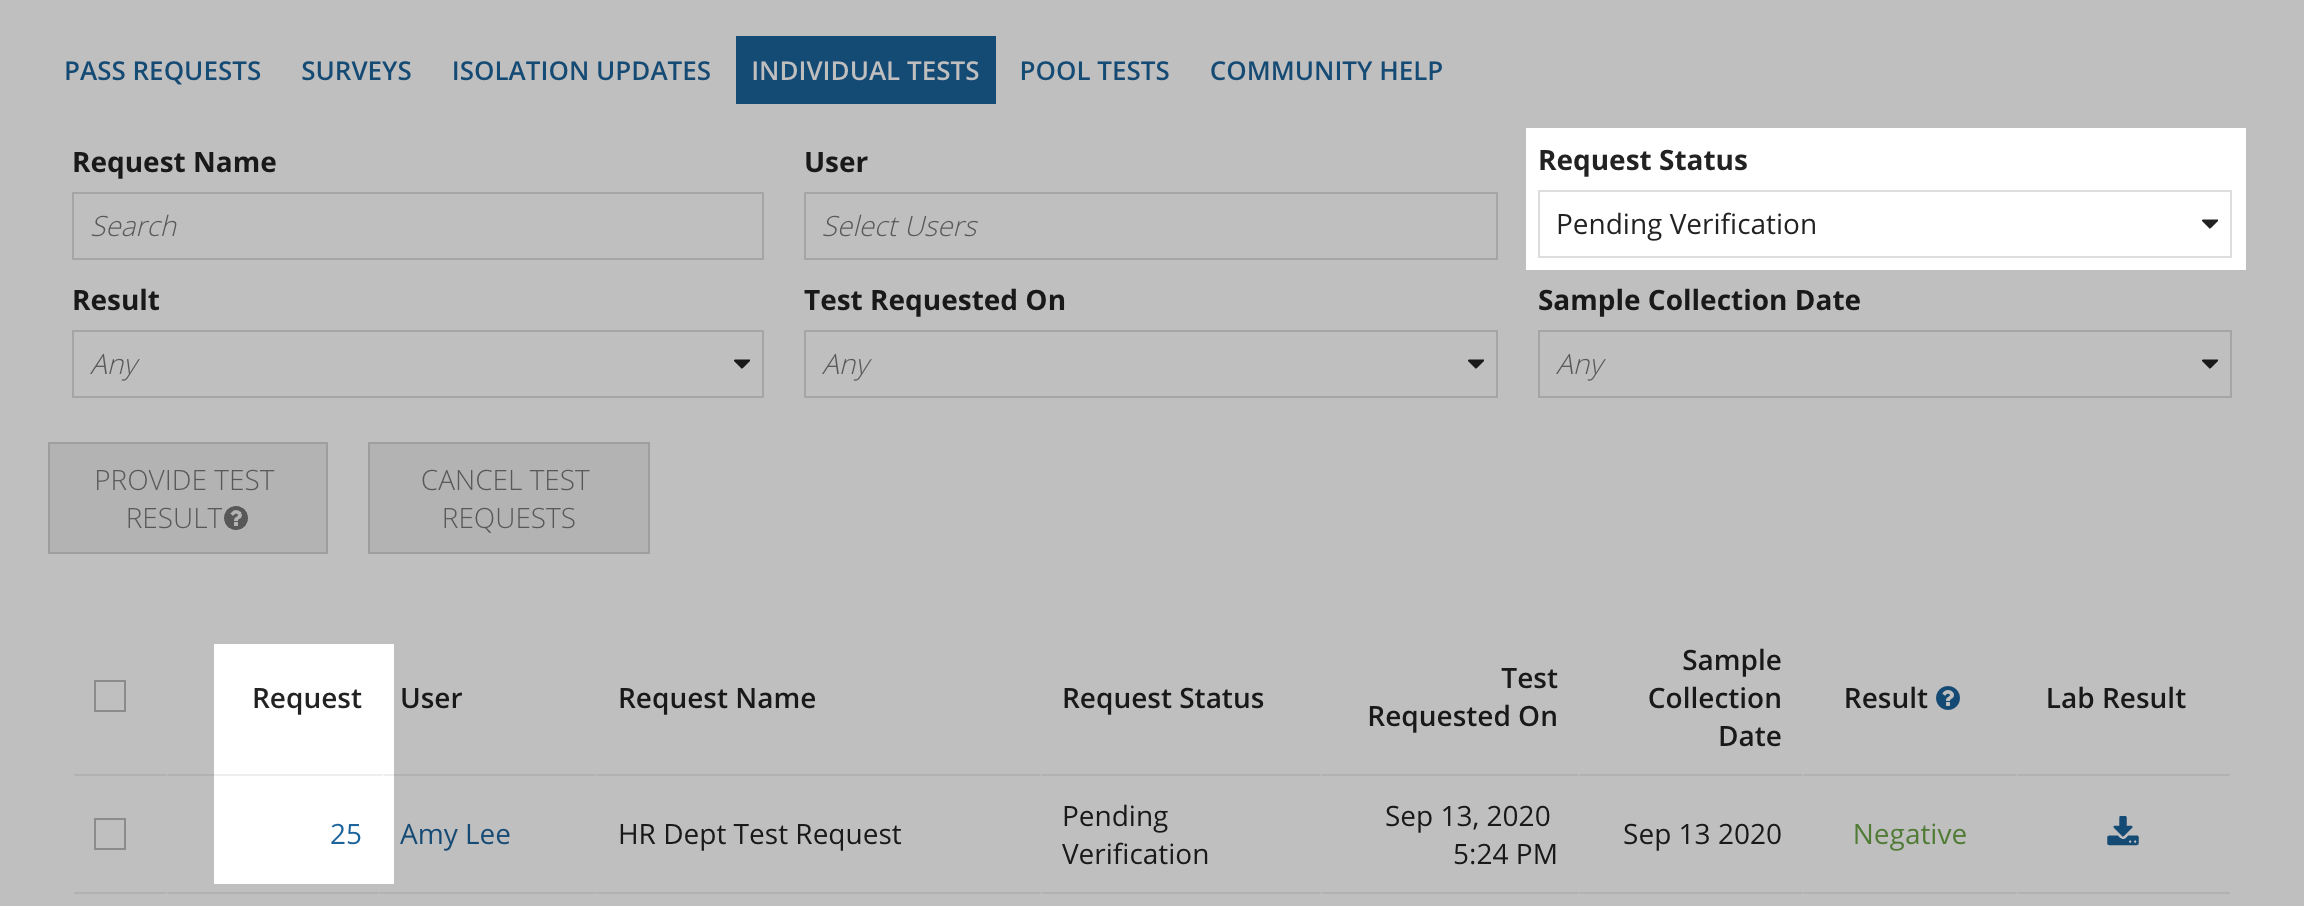 review test pending verification filter